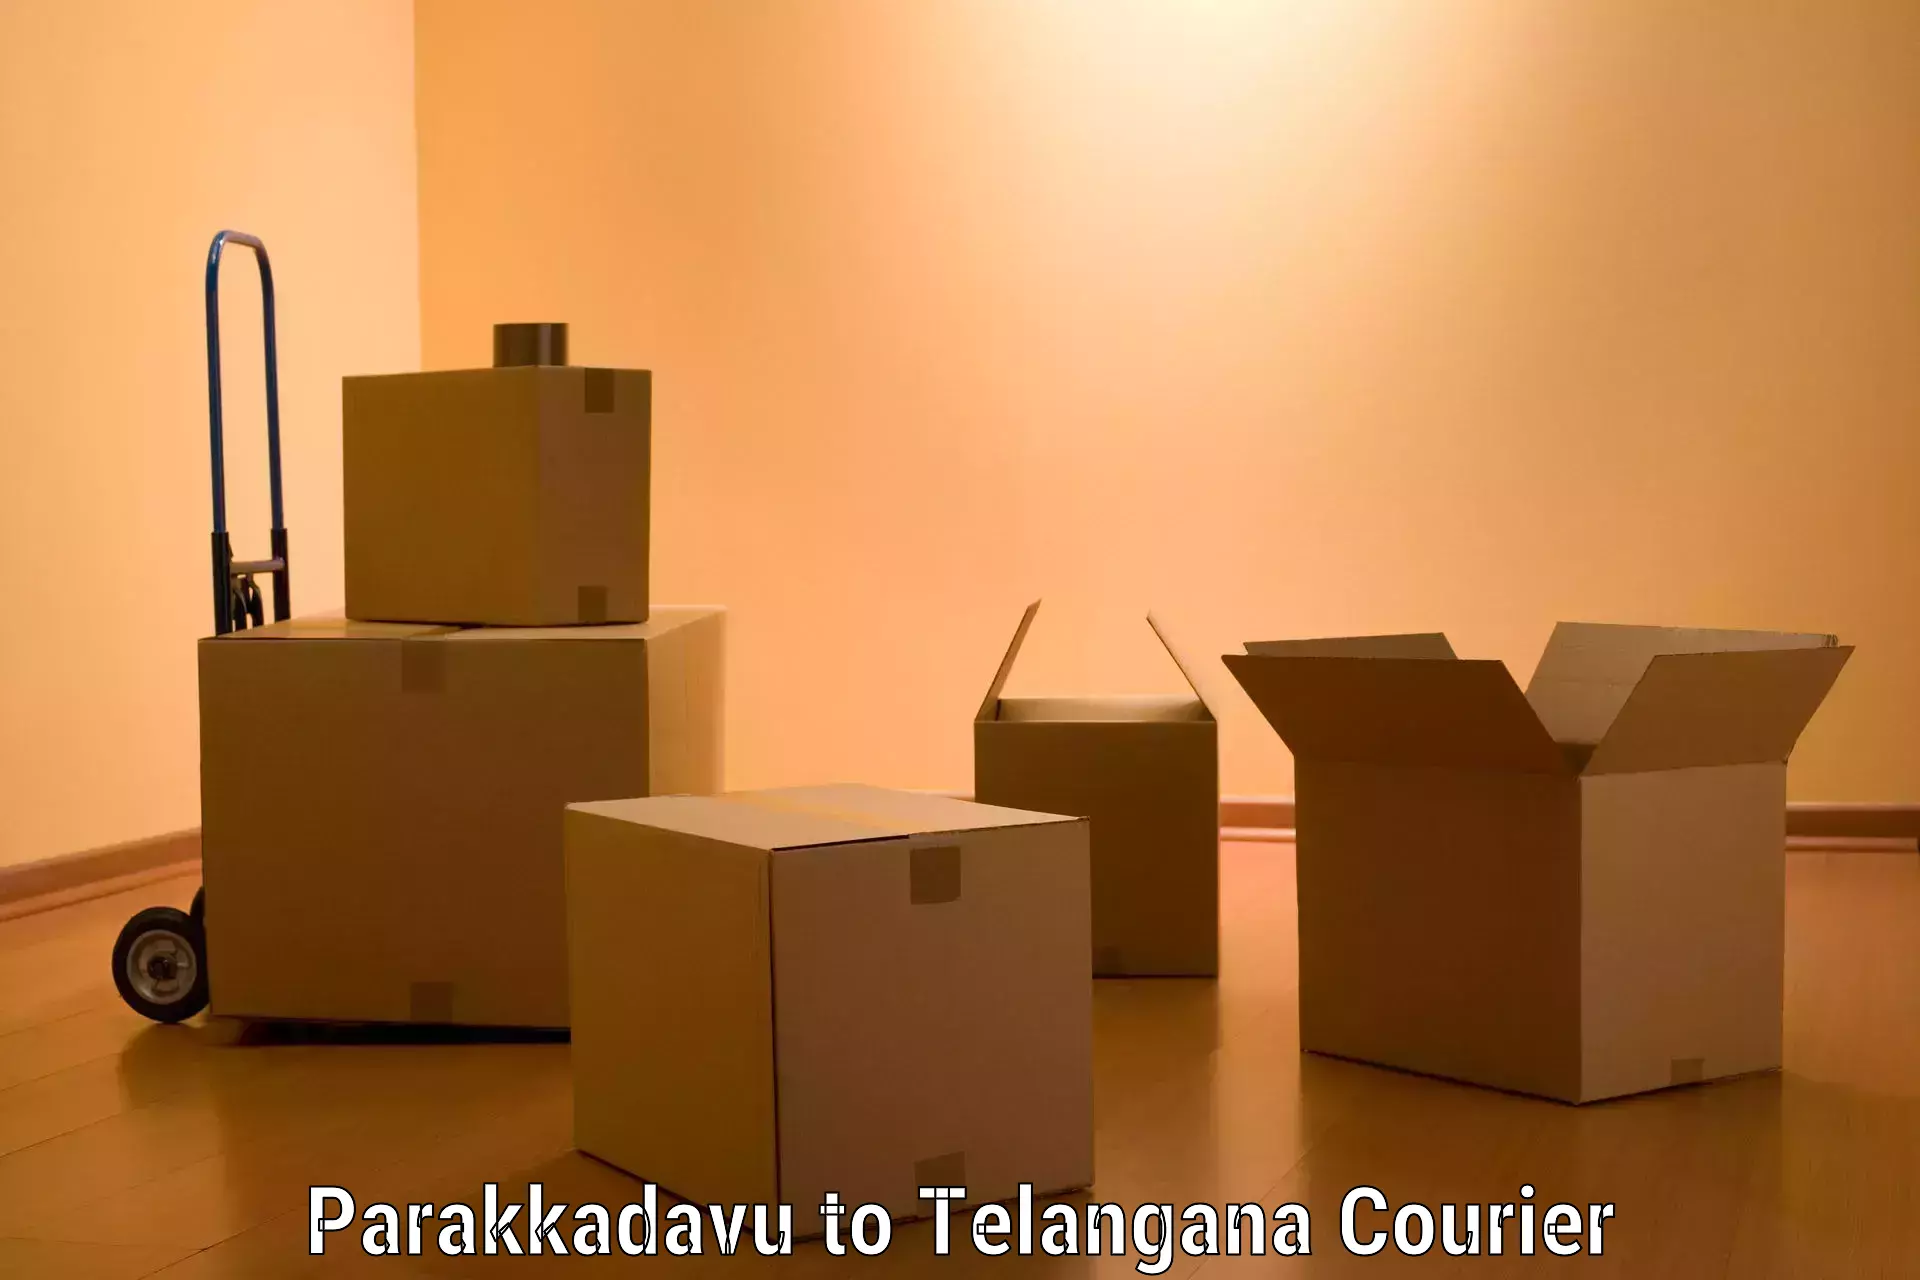 Professional moving company Parakkadavu to Chennur